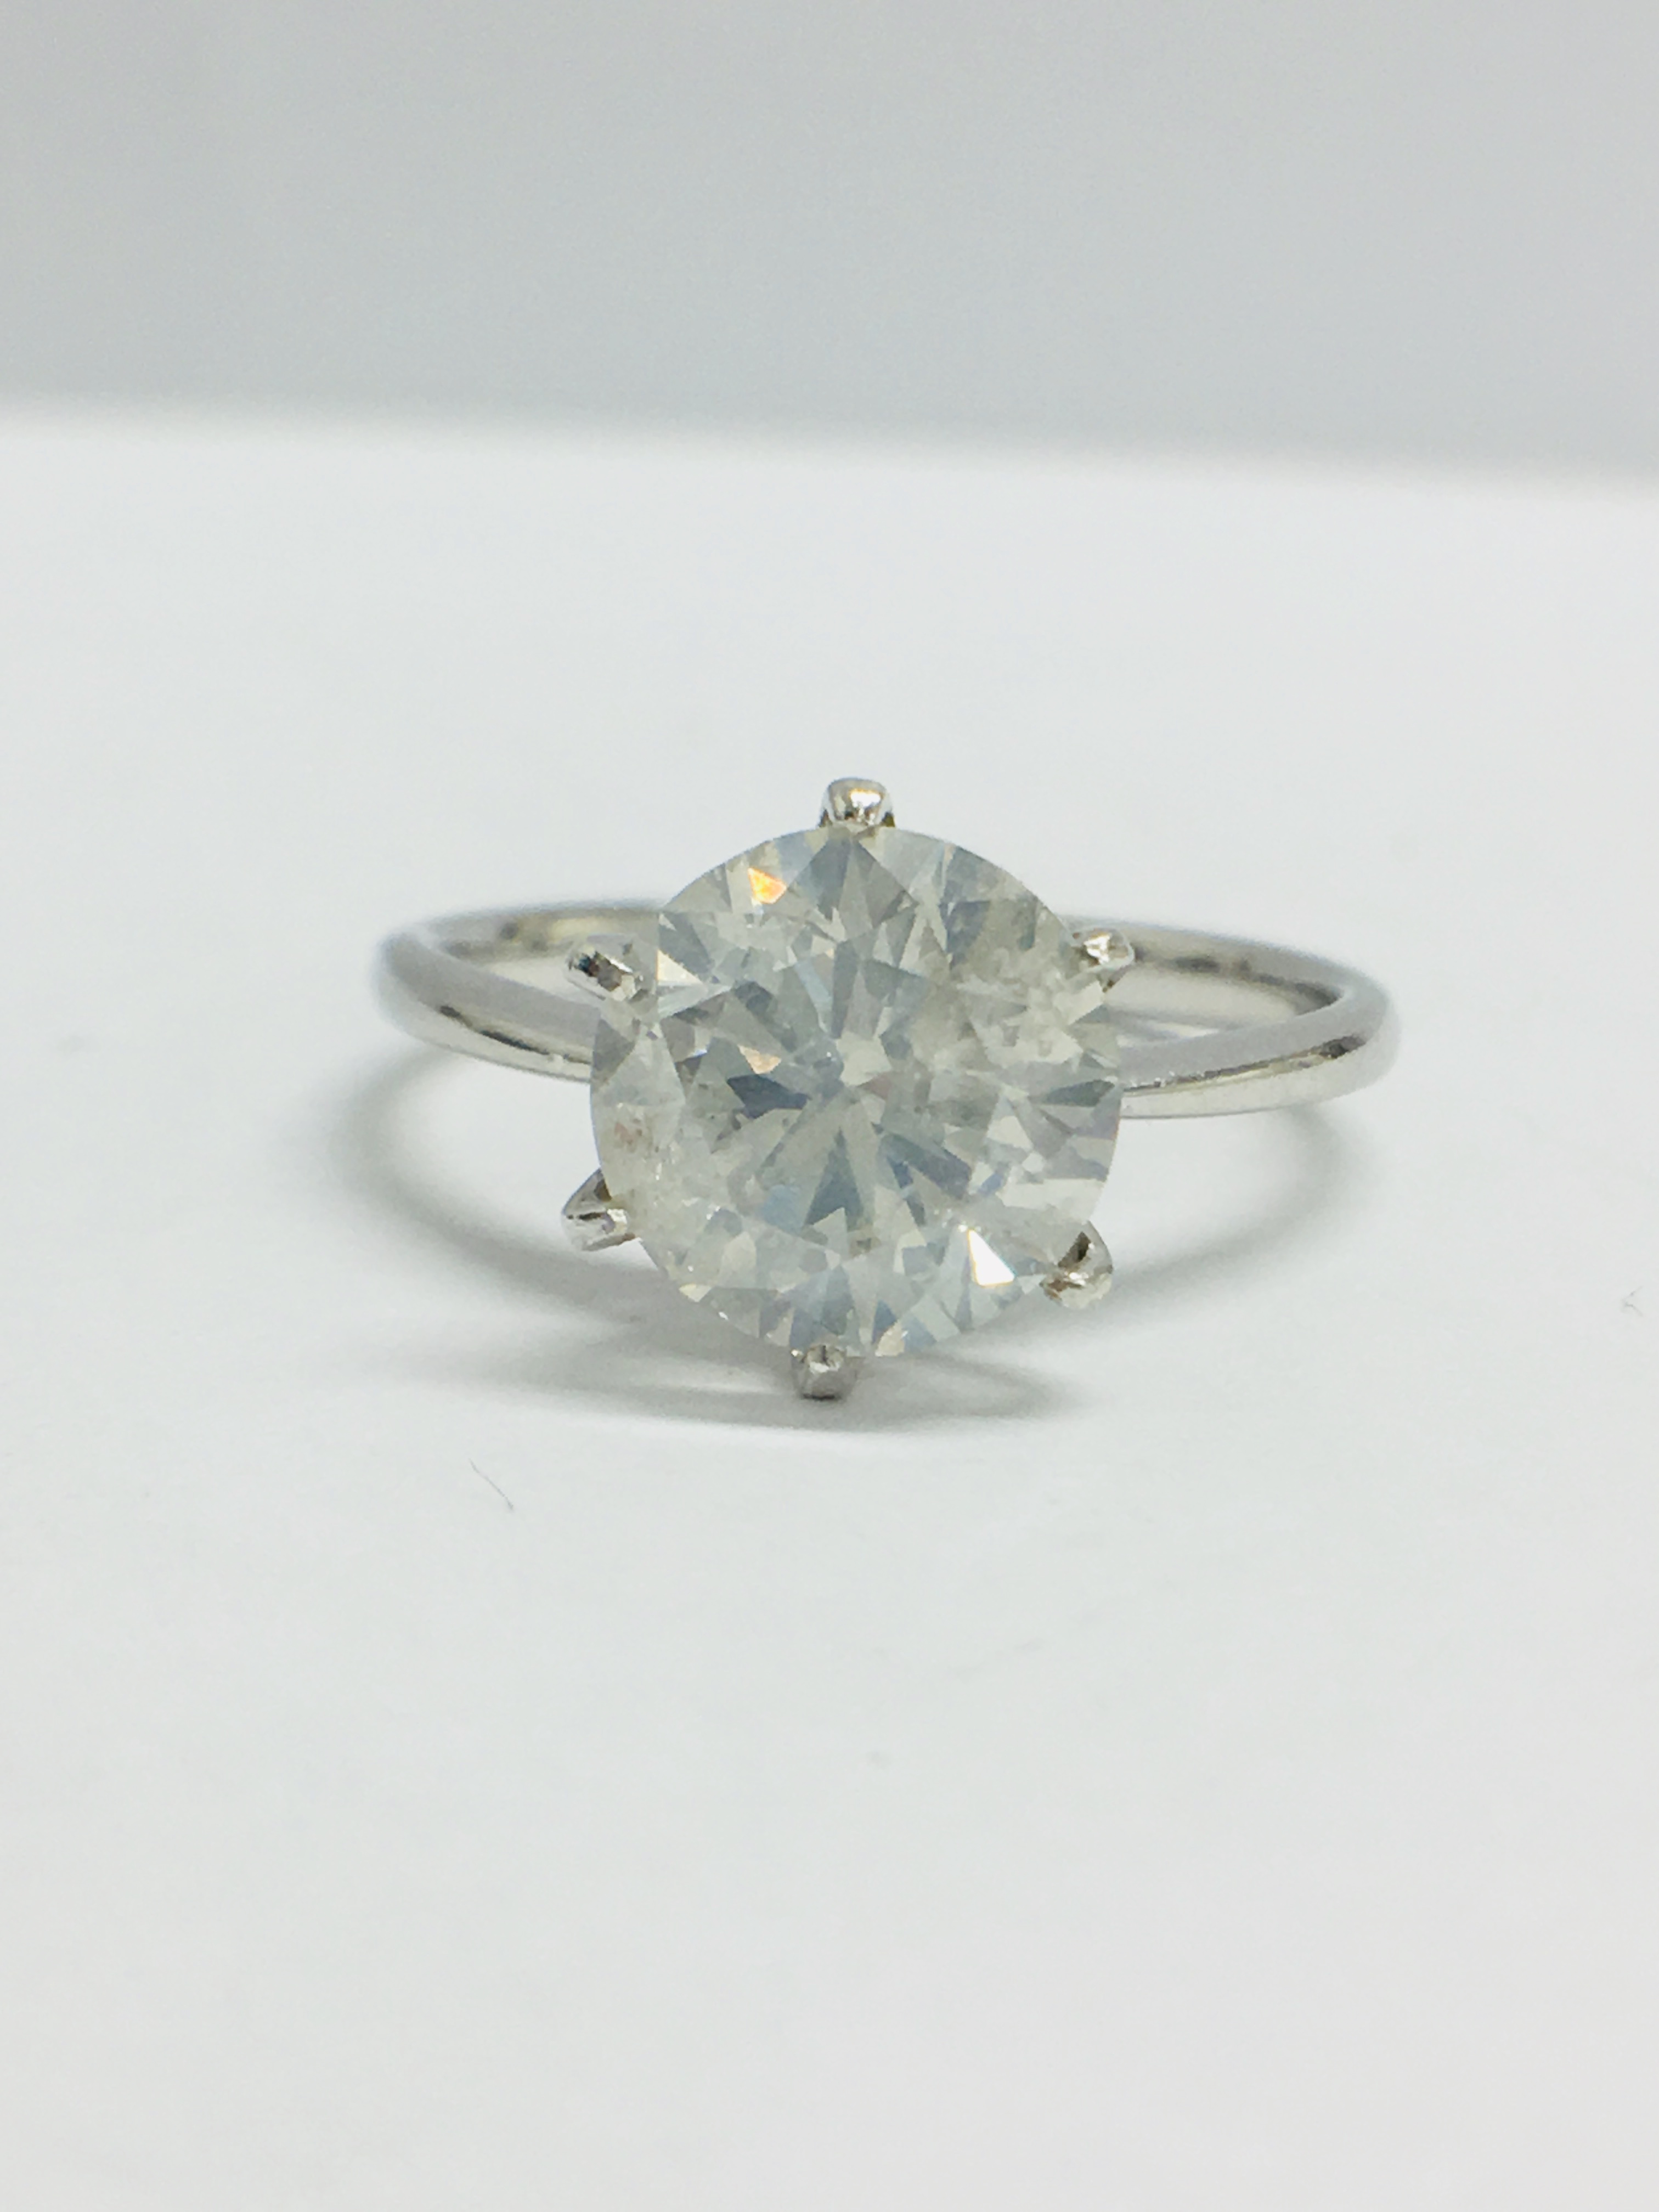 1.80ct diamond solitaire ring set in Platinum setting - Image 9 of 10